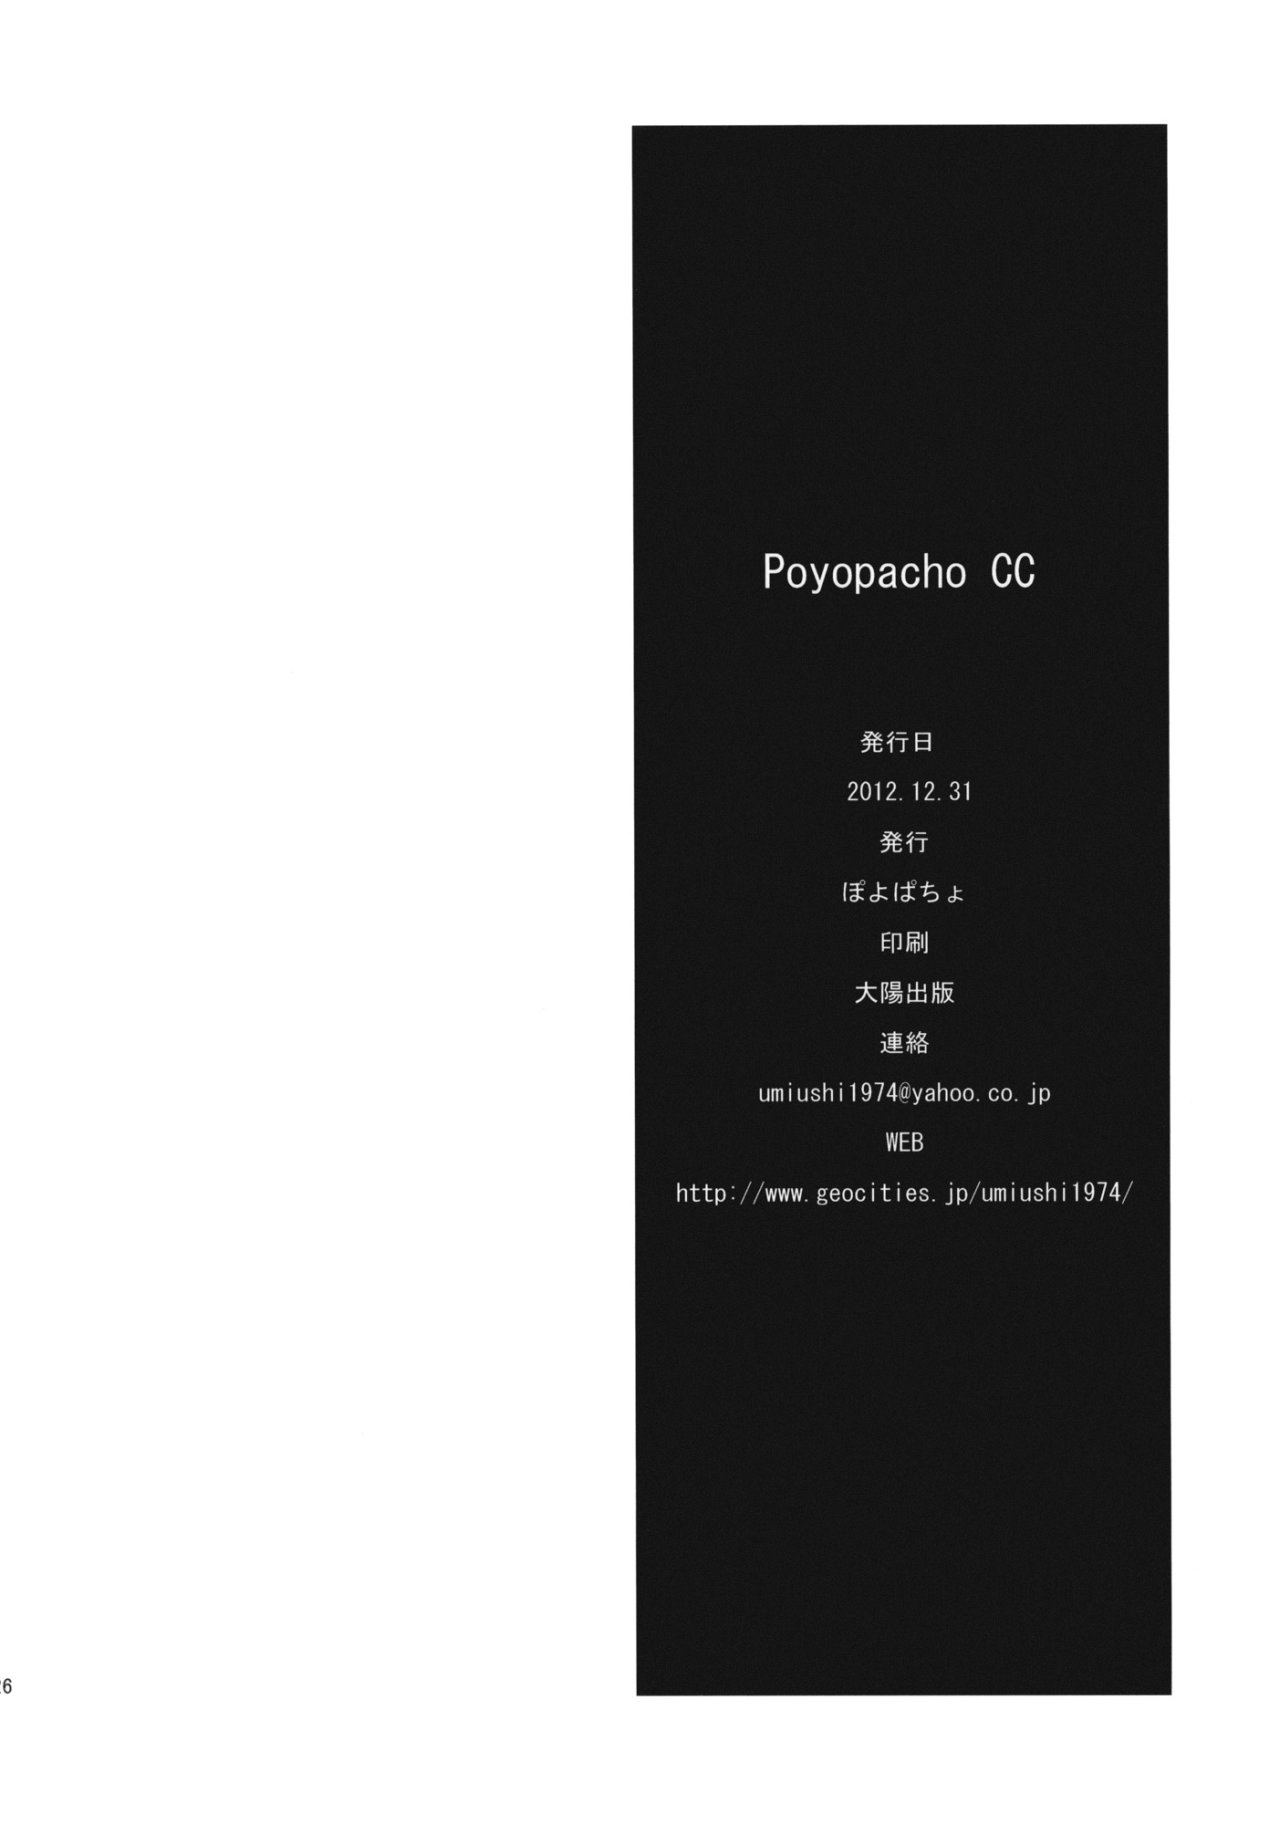 Poyopacho CC - 24